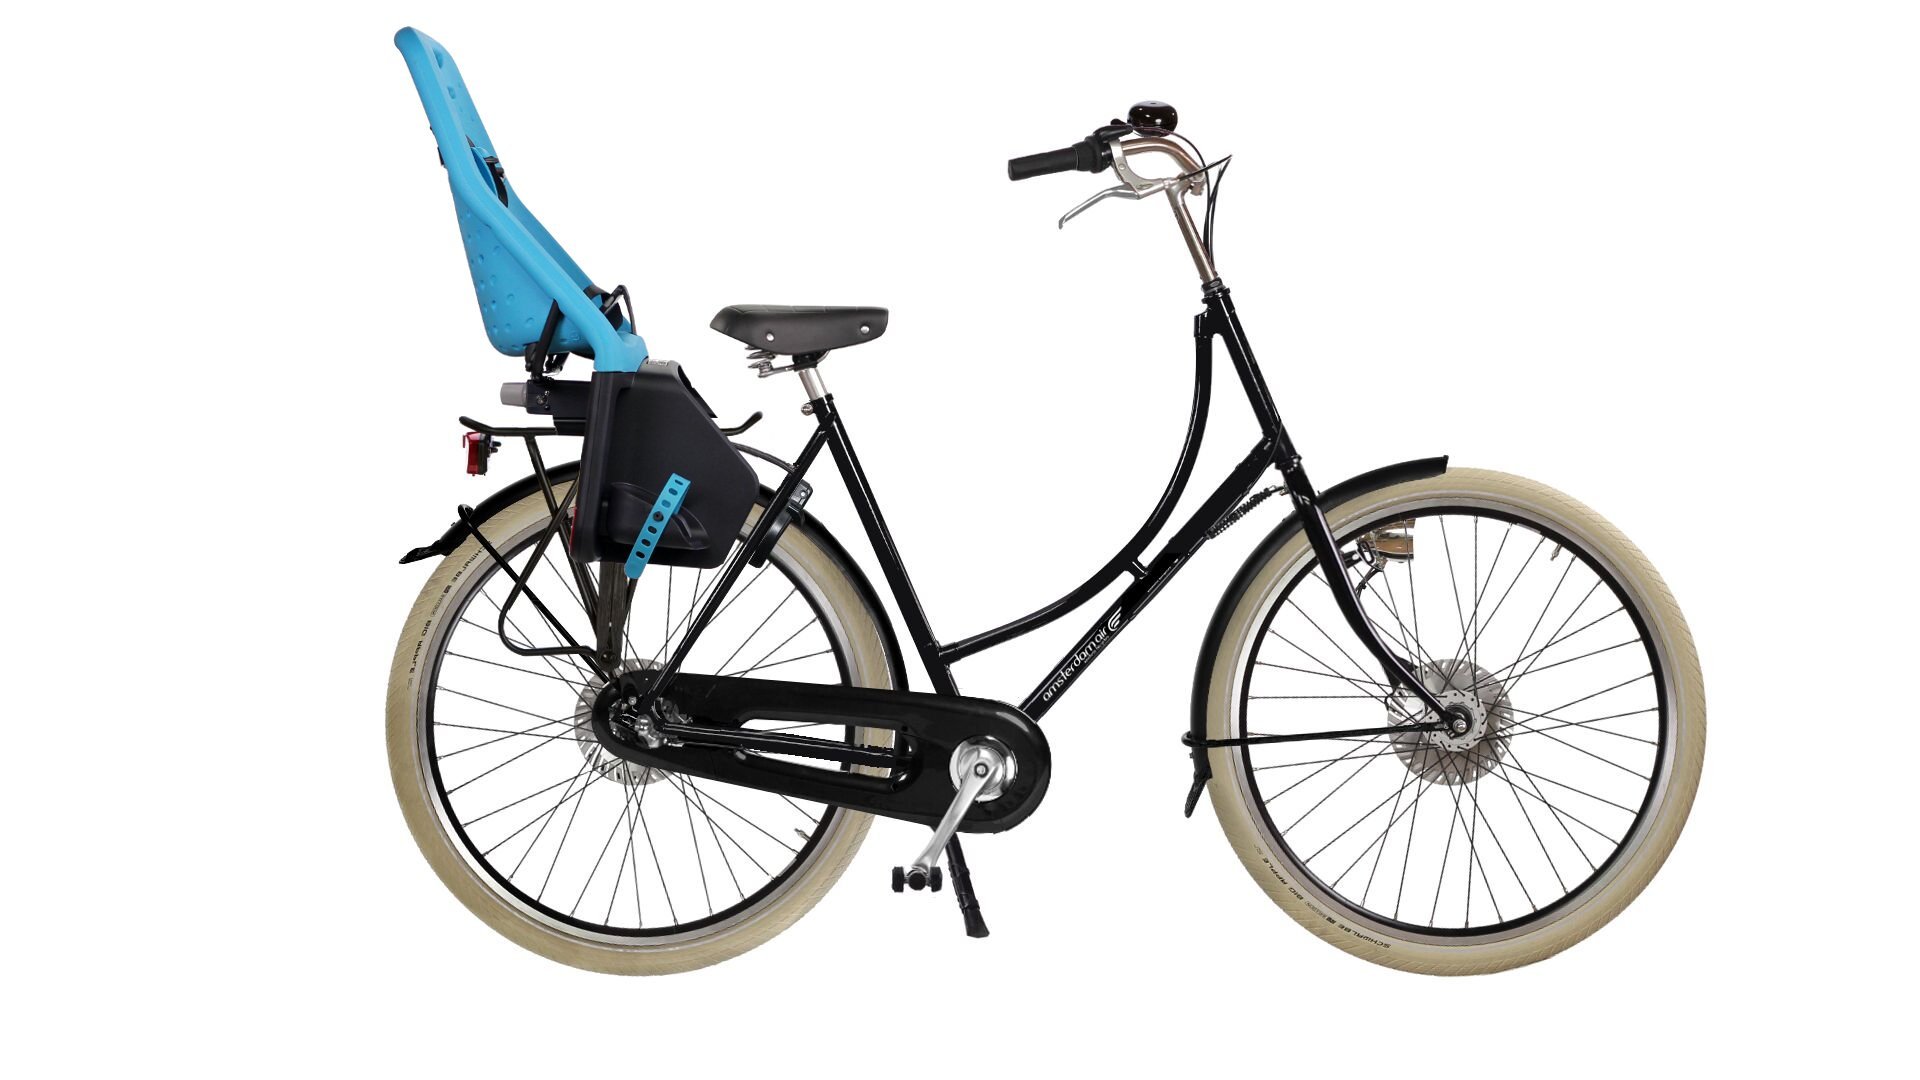 Siège enfant Yepp Maxi bleu sur vélo hollandais Oma Premium